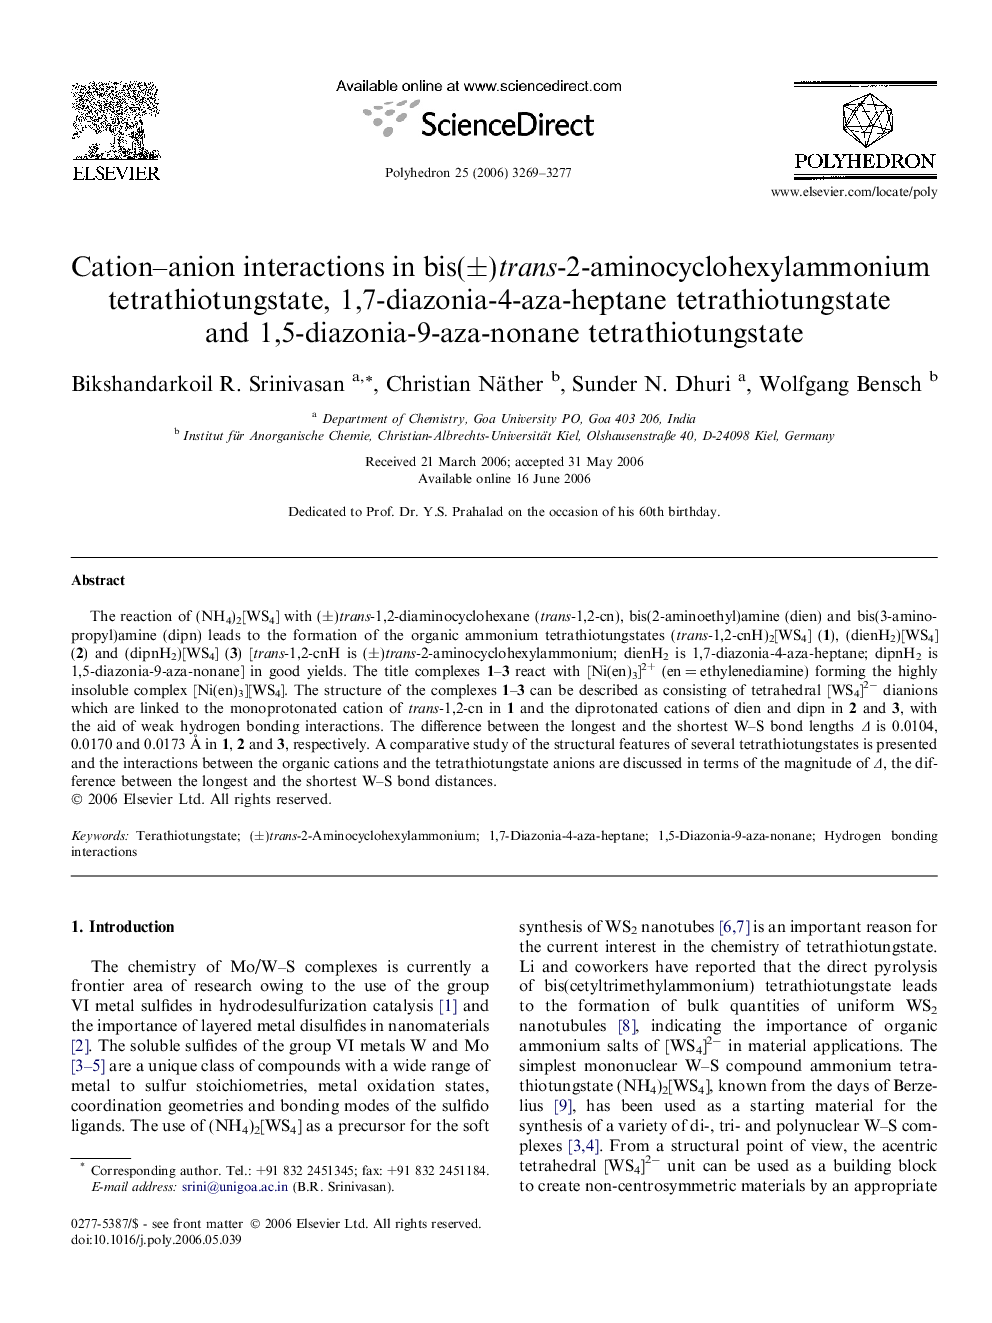 Cation-anion interactions in bis(Â±)trans-2-aminocyclohexylammonium tetrathiotungstate, 1,7-diazonia-4-aza-heptane tetrathiotungstate and 1,5-diazonia-9-aza-nonane tetrathiotungstate